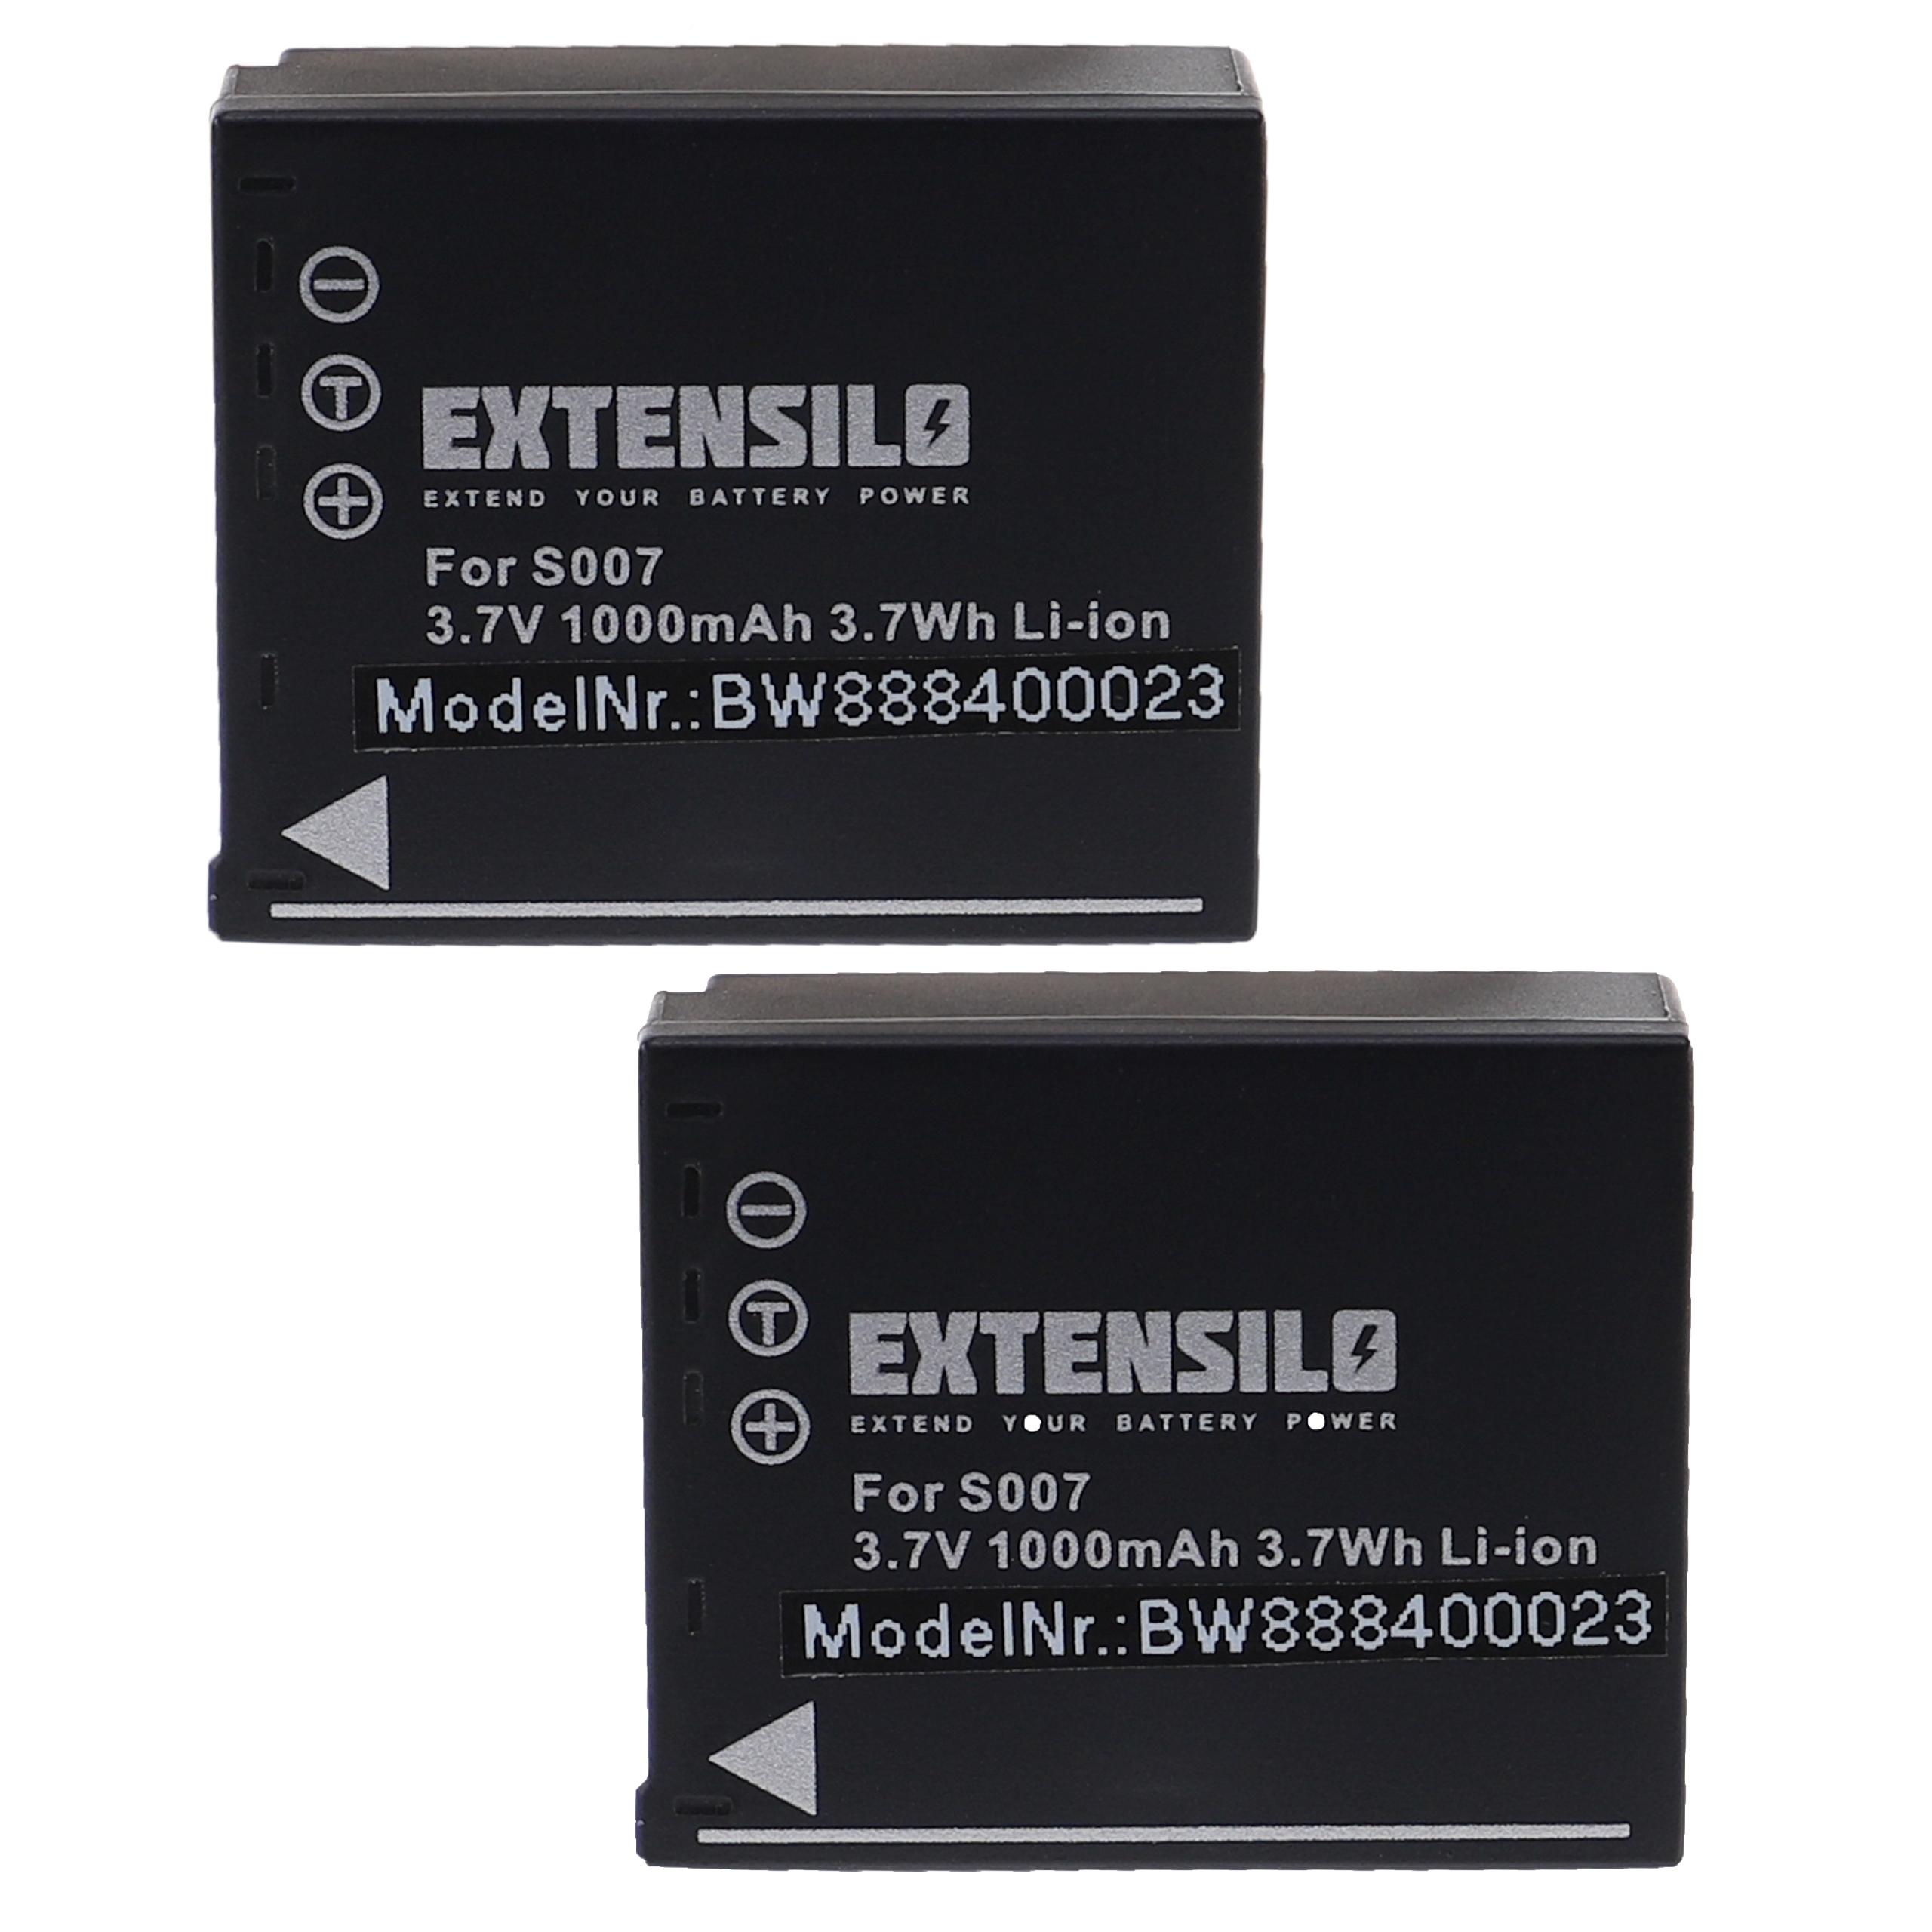 Battery (2 Units) Replacement for Panasonic CGA-S007A/B, CGA-S007, CGA-S007A/1B - 1000mAh, 3.7V, Li-Ion